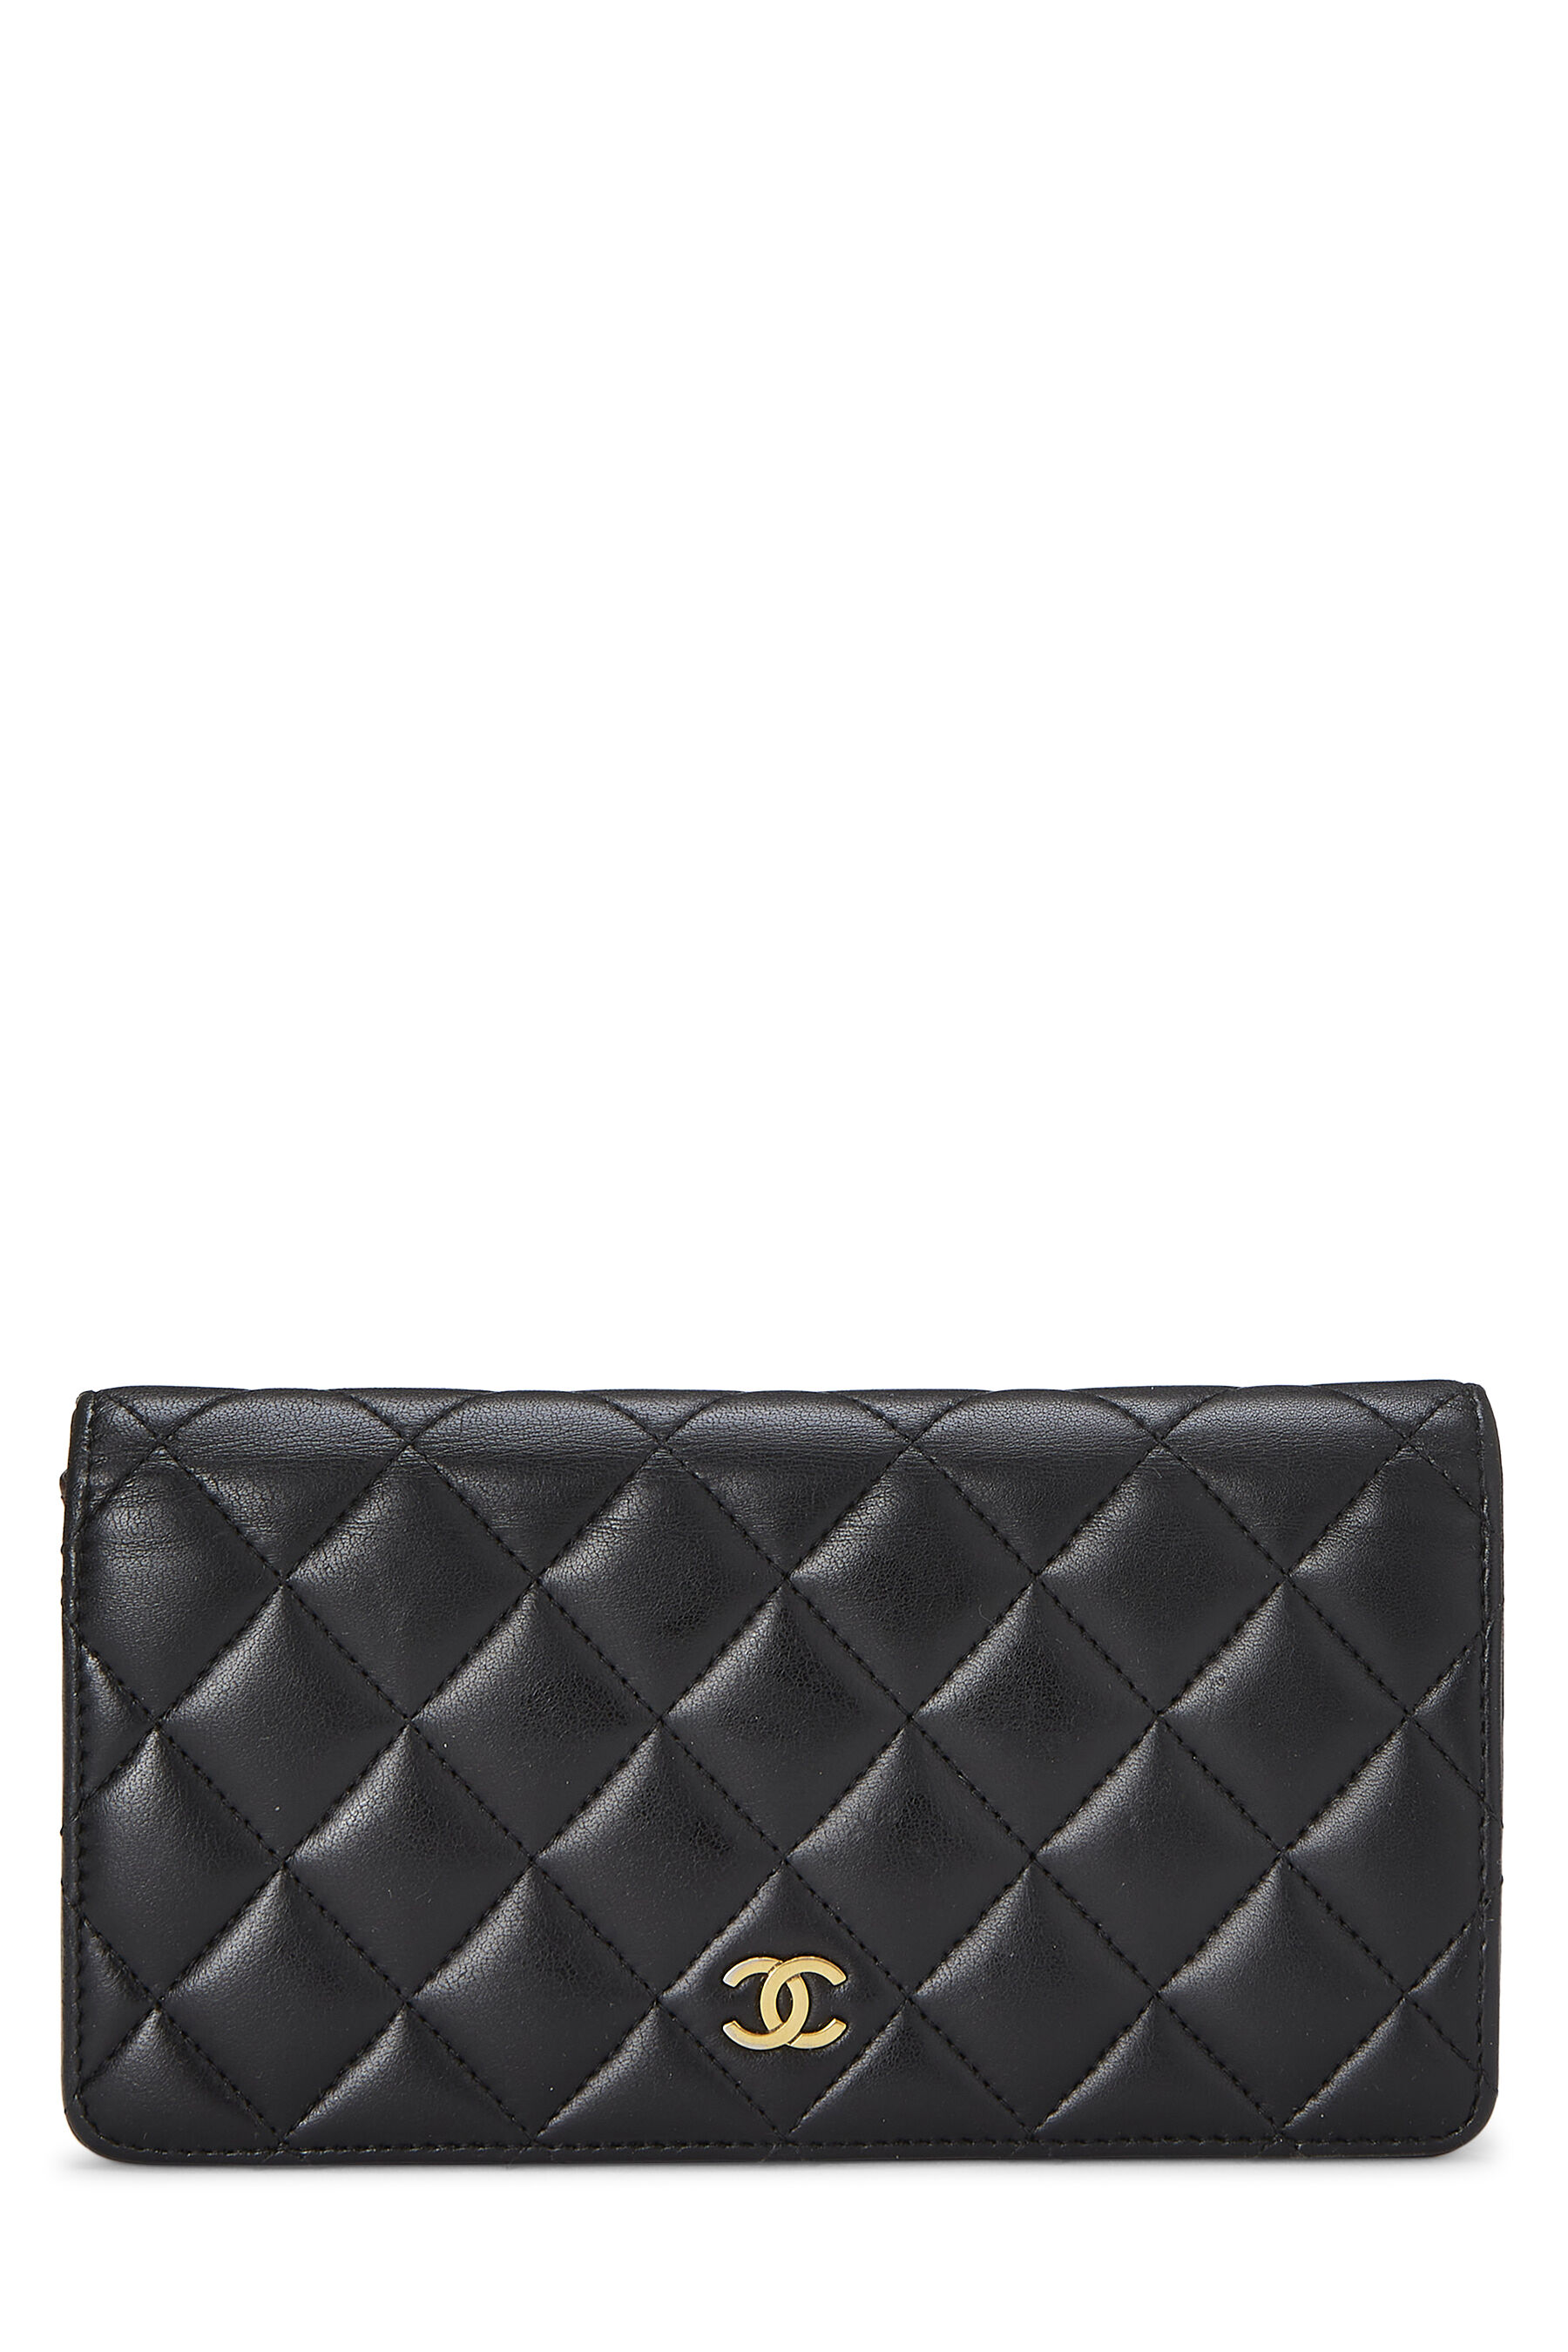 CHANEL Long Wallet Leather BLK Plain wa690